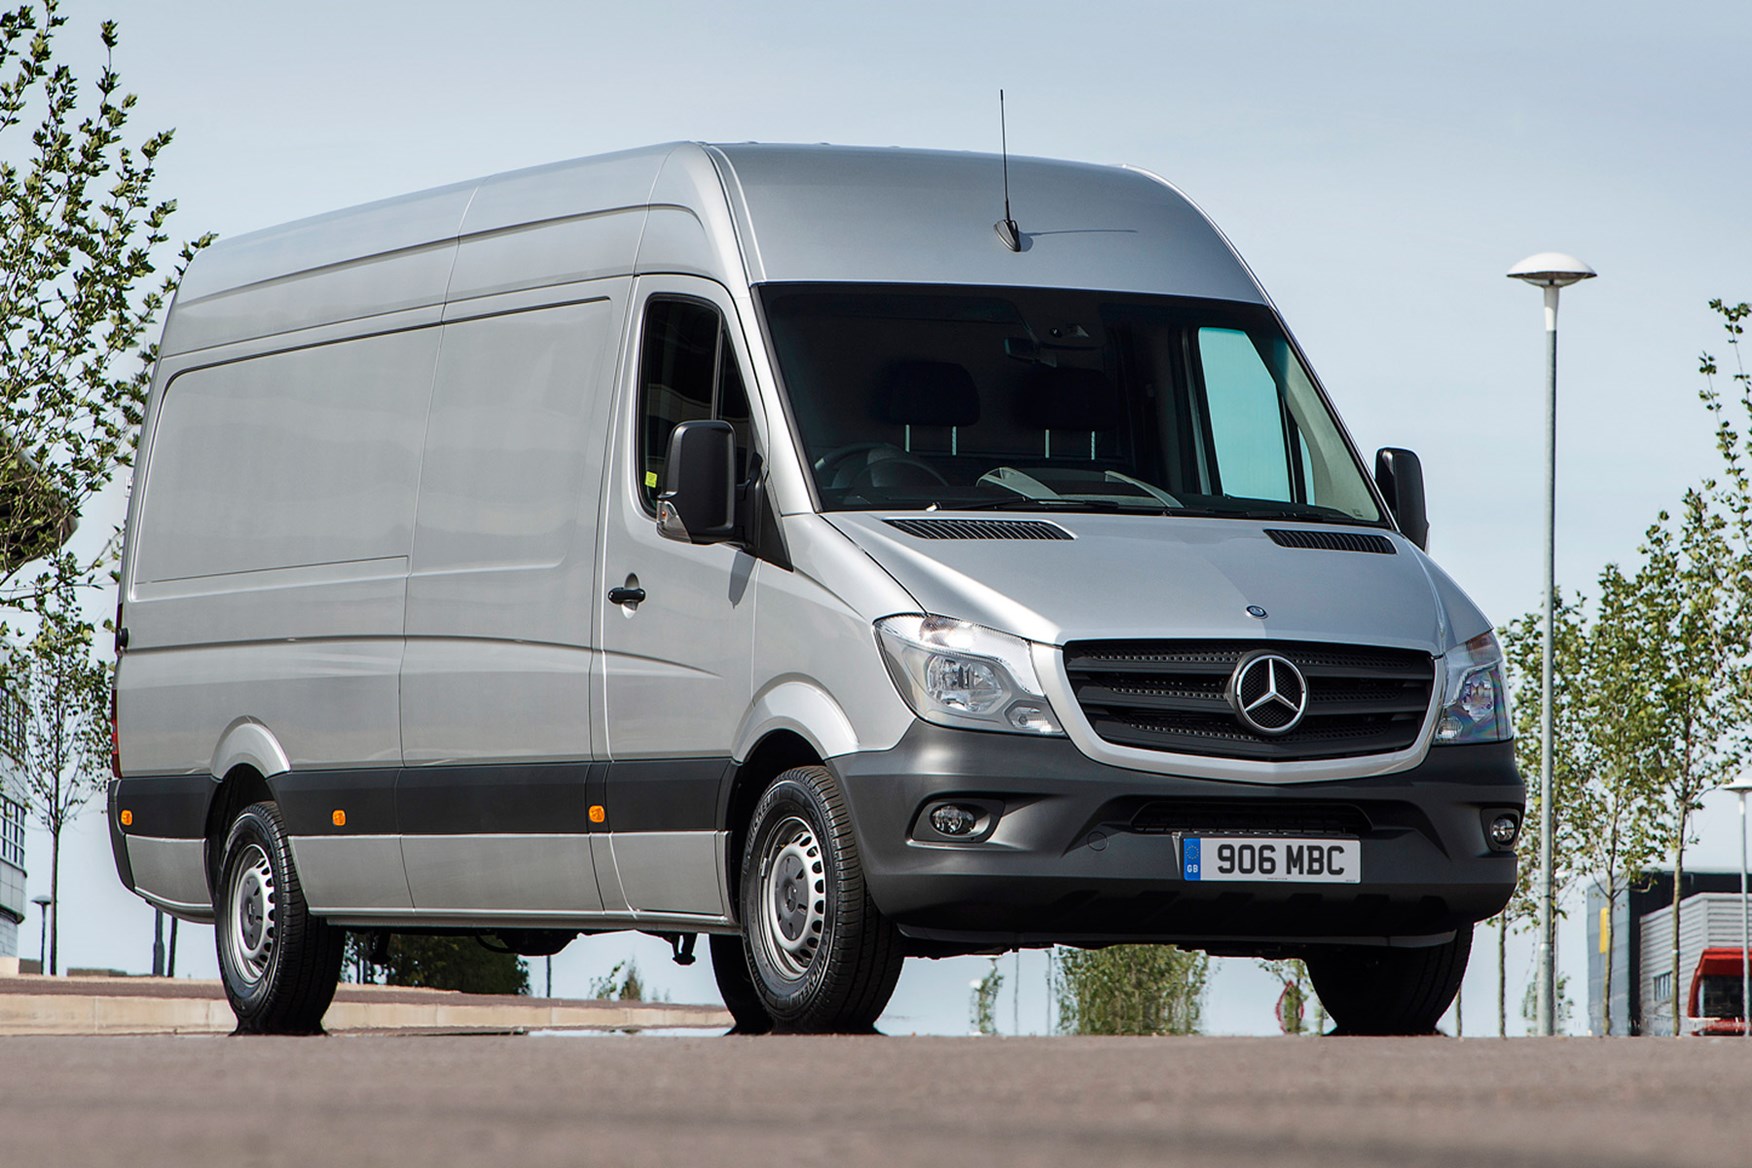 Mercedes-Benz Sprinter full review on Parkers Vans - exterior